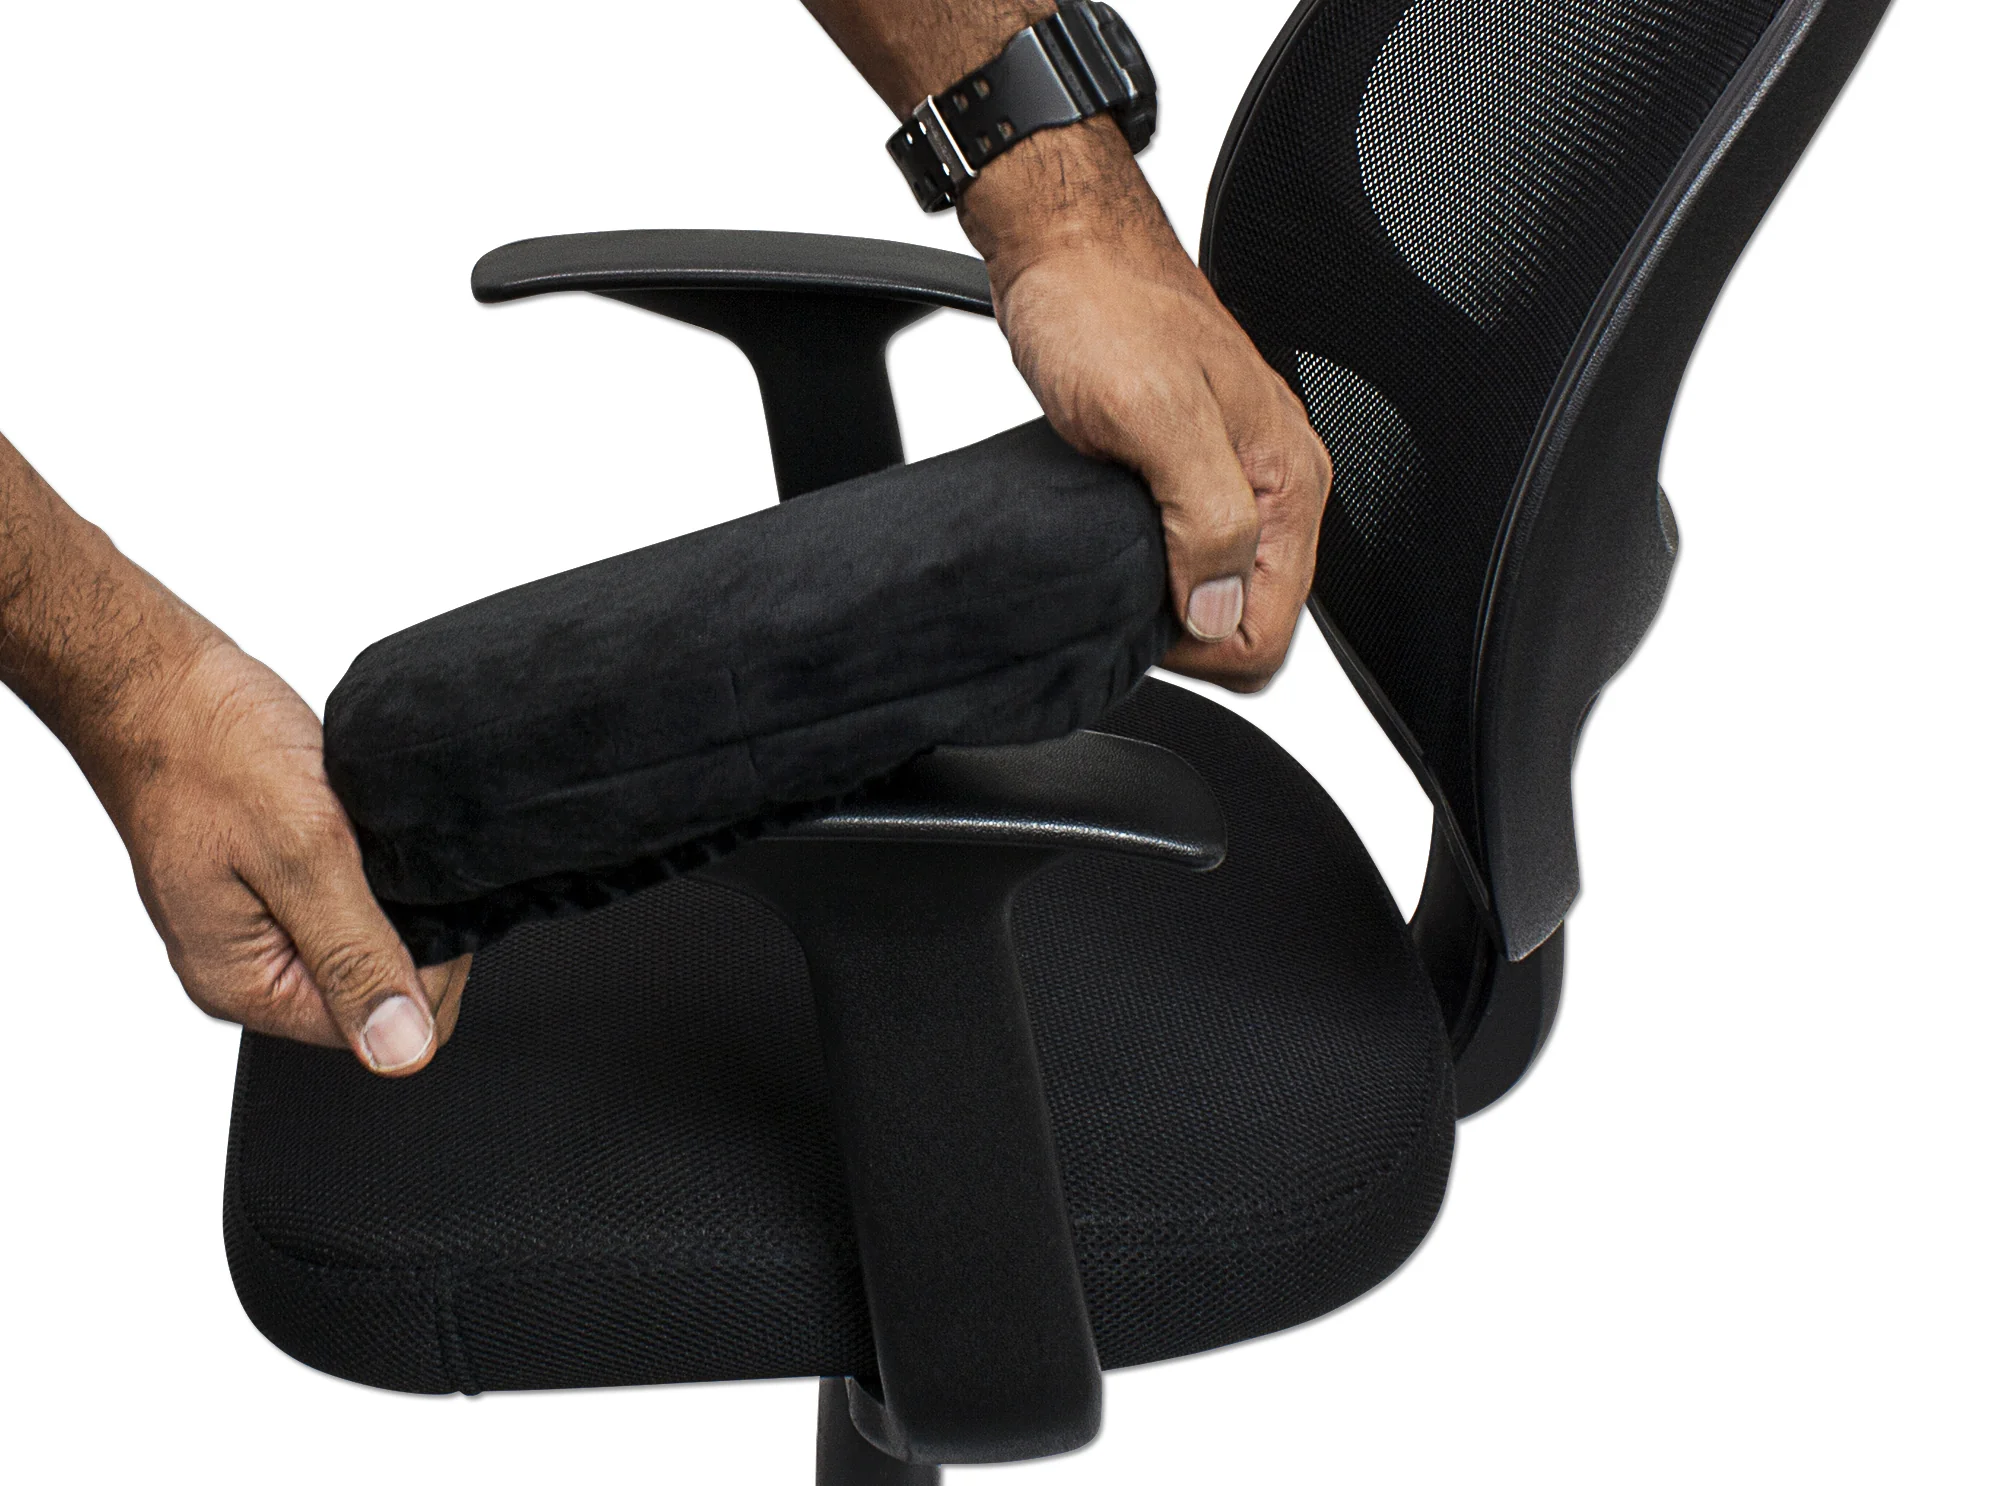 How To Fix An Office Chair Armrest